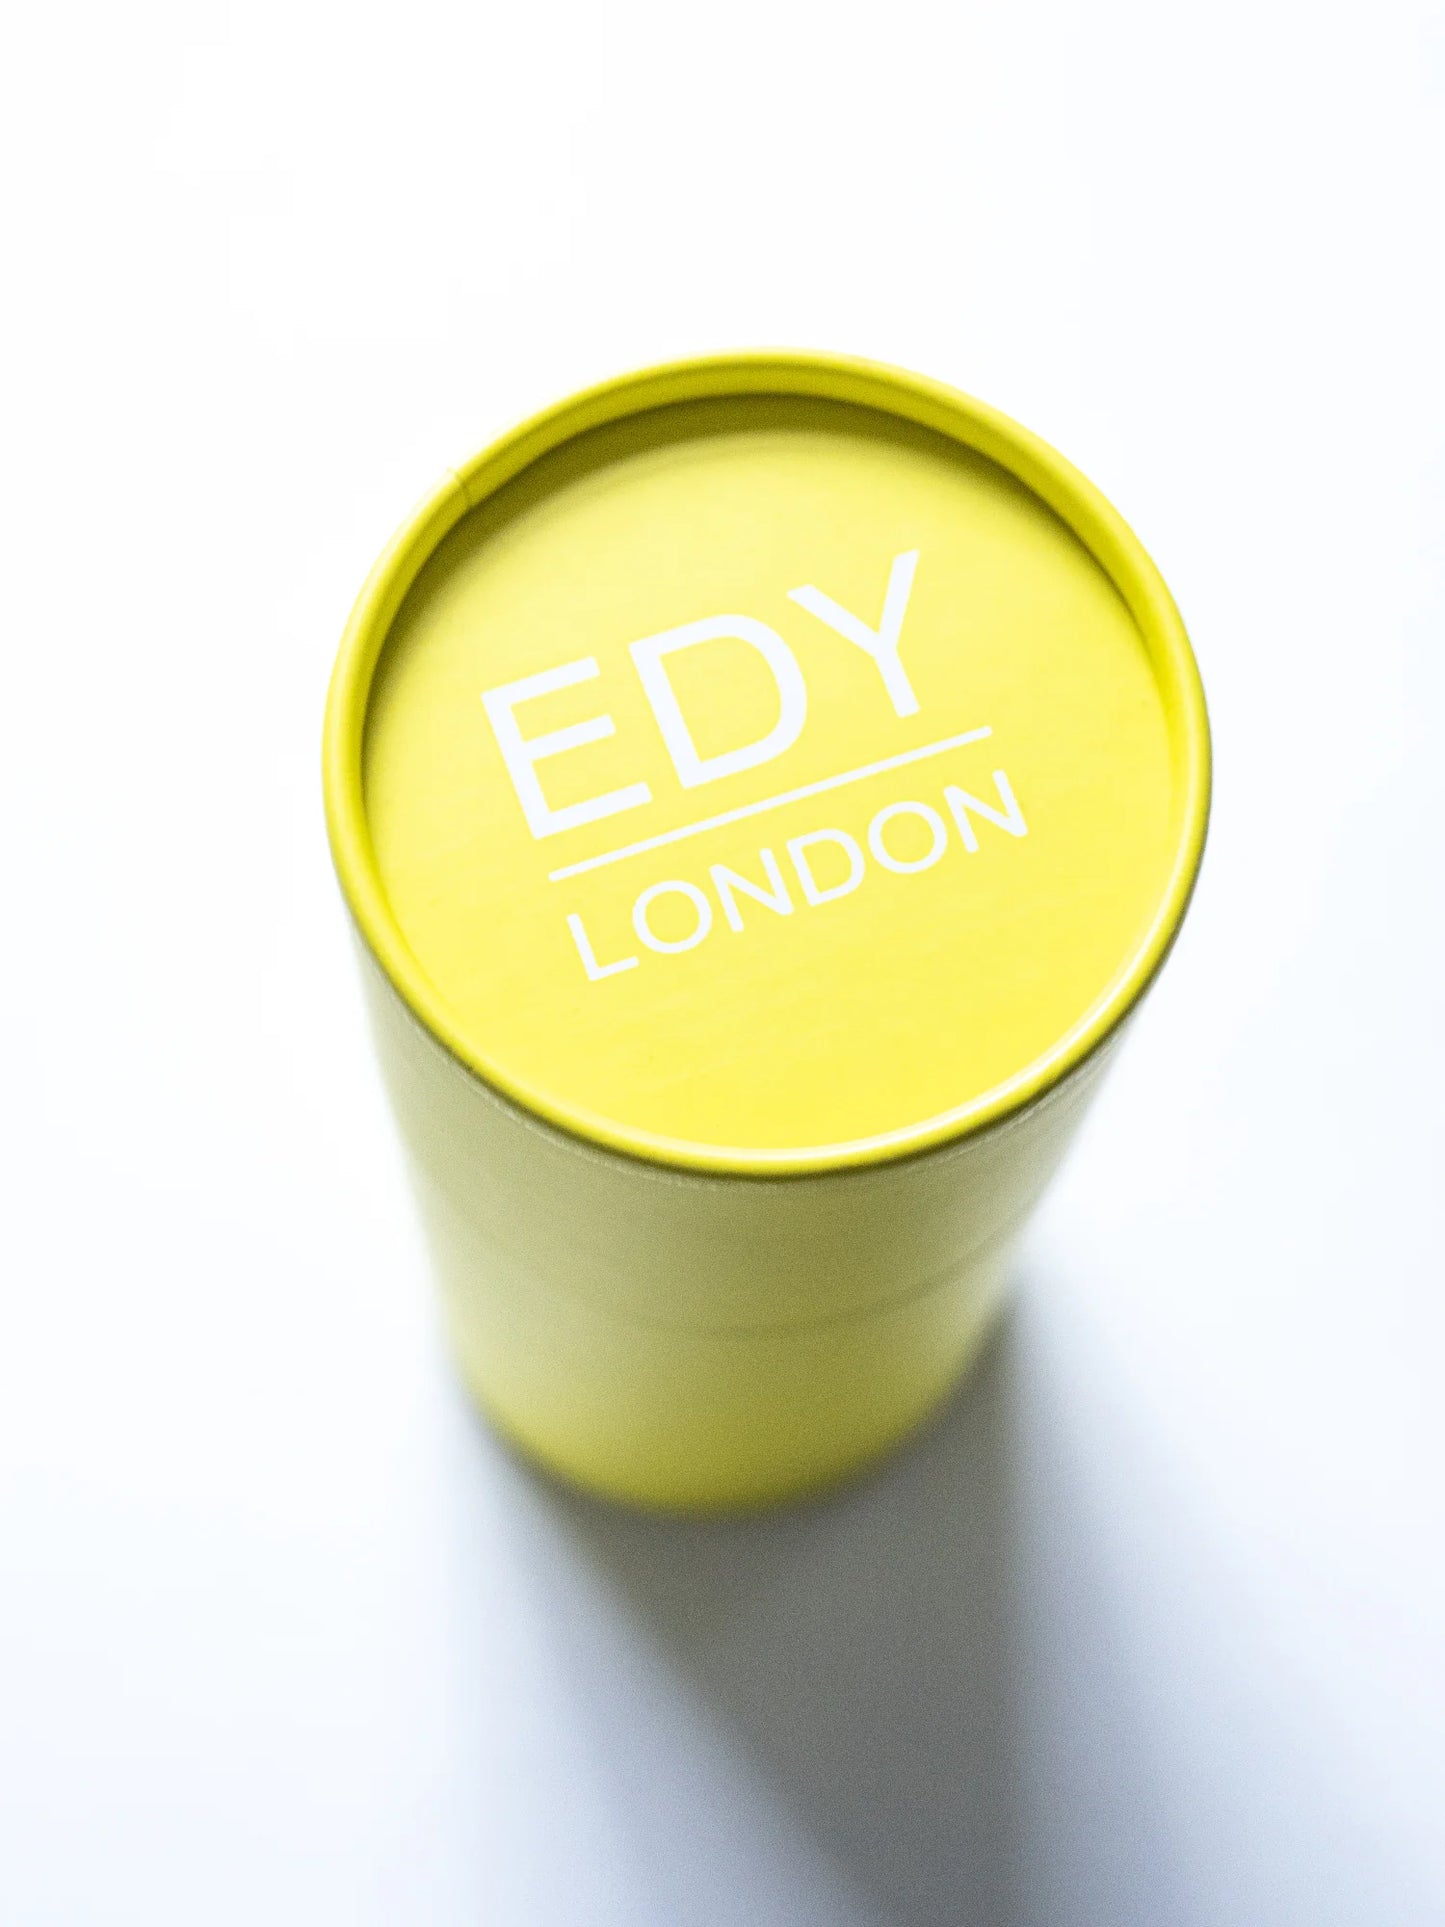 Essential Brush Set 505 Make-up Brush EDY LONDON    - EDY LONDON PRODUCTS UK - The Best Makeup Brushes - shop.edy.london